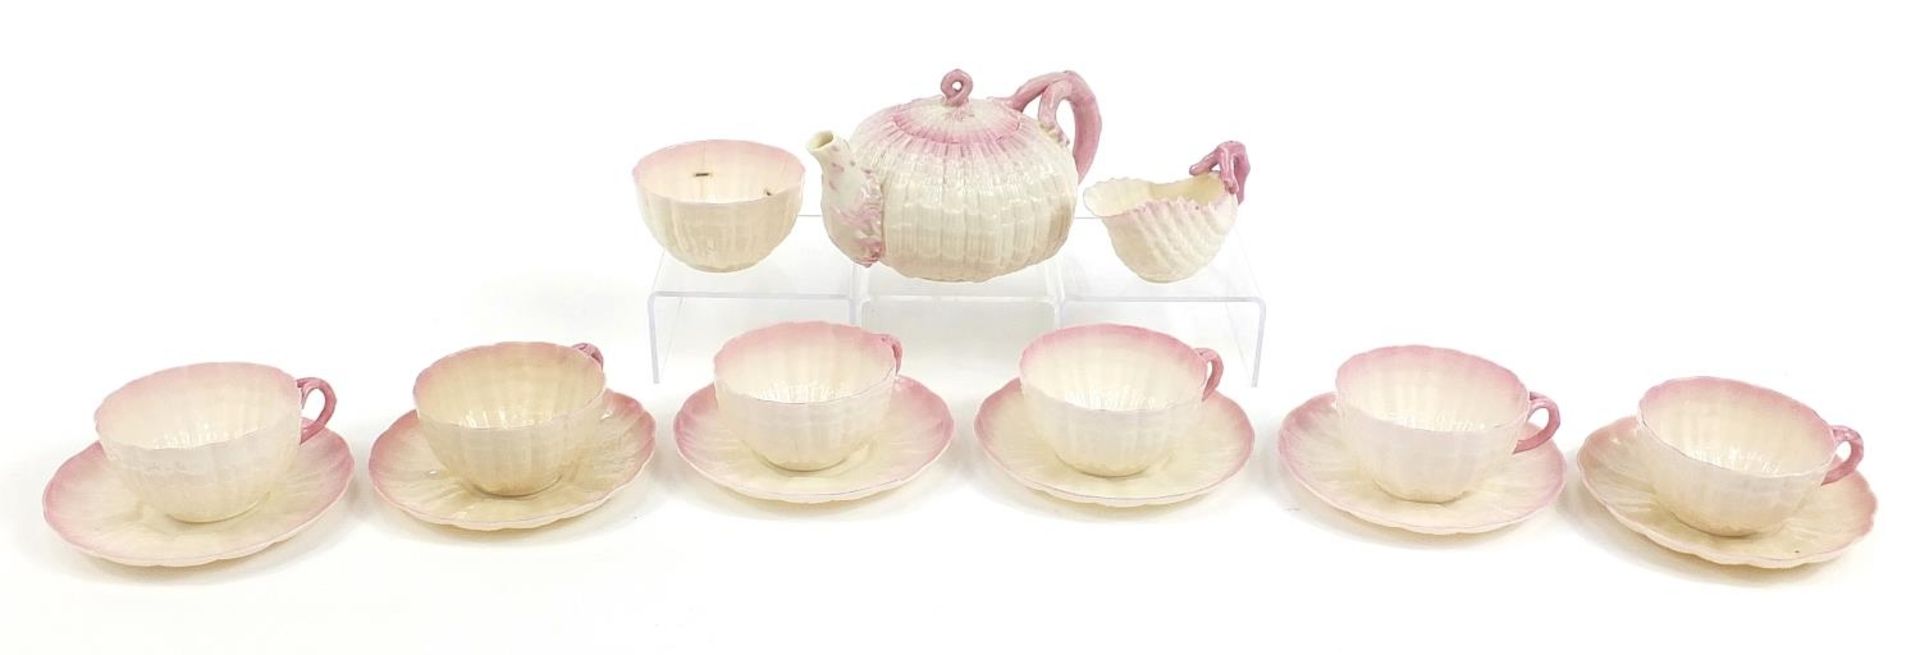 Belleek, Irish porcelain shell design six place tea service comprising teapot, six cups with